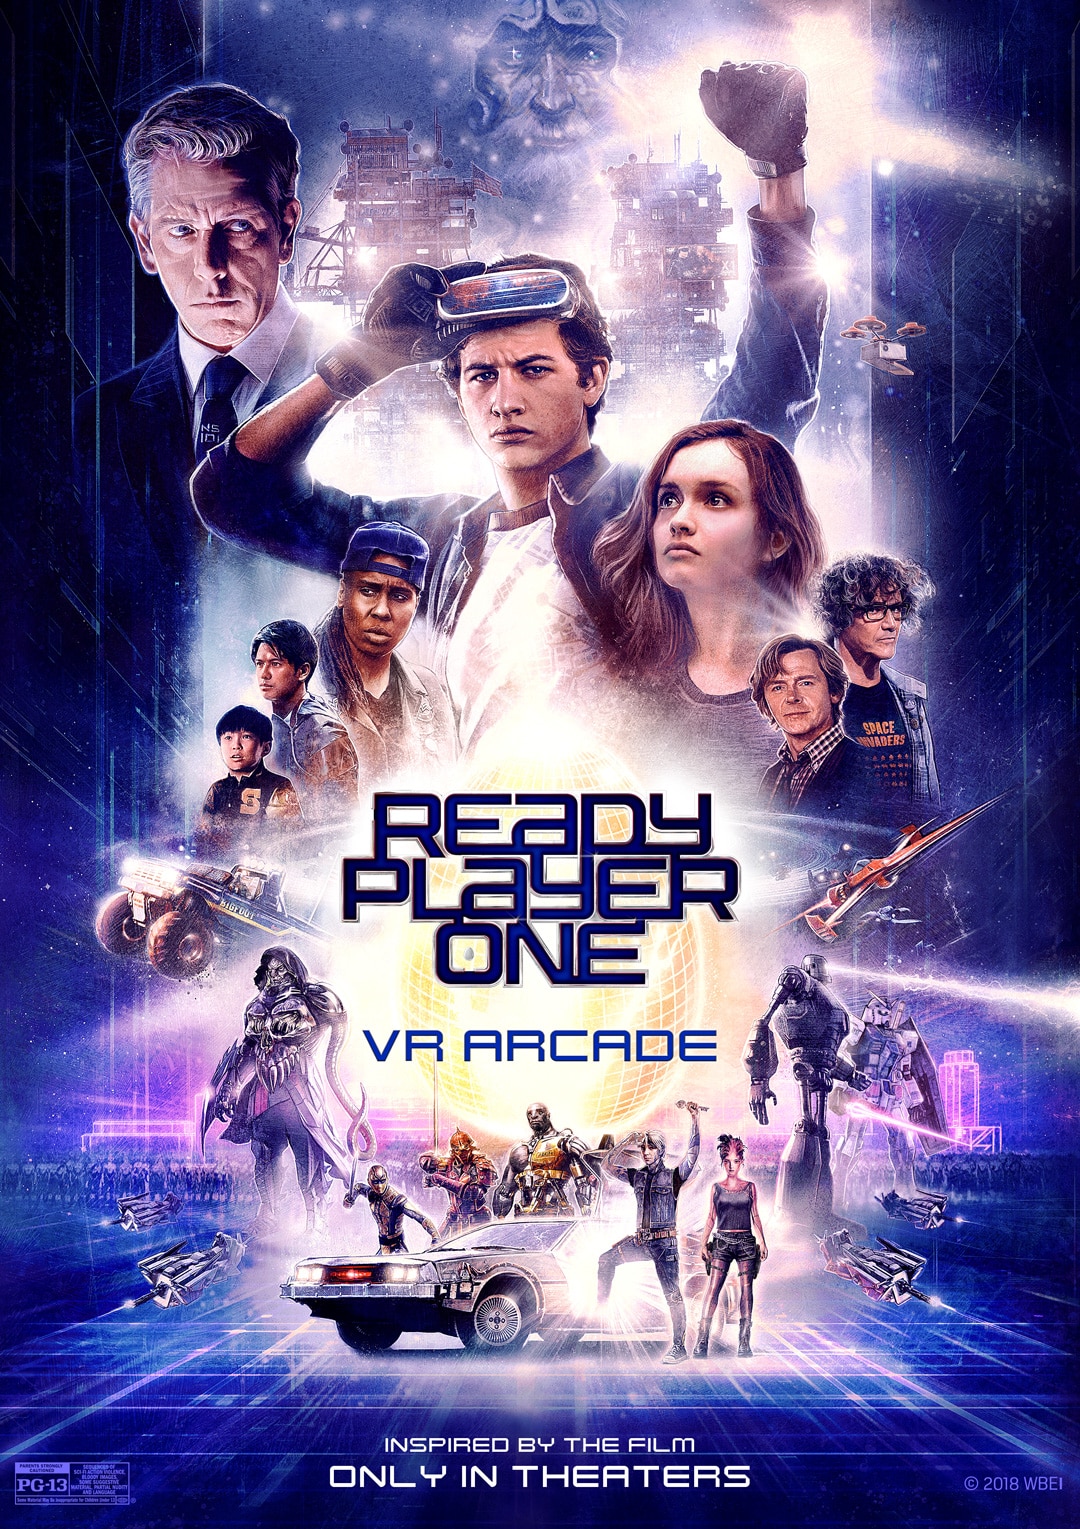 Ready Player One VR Arcade